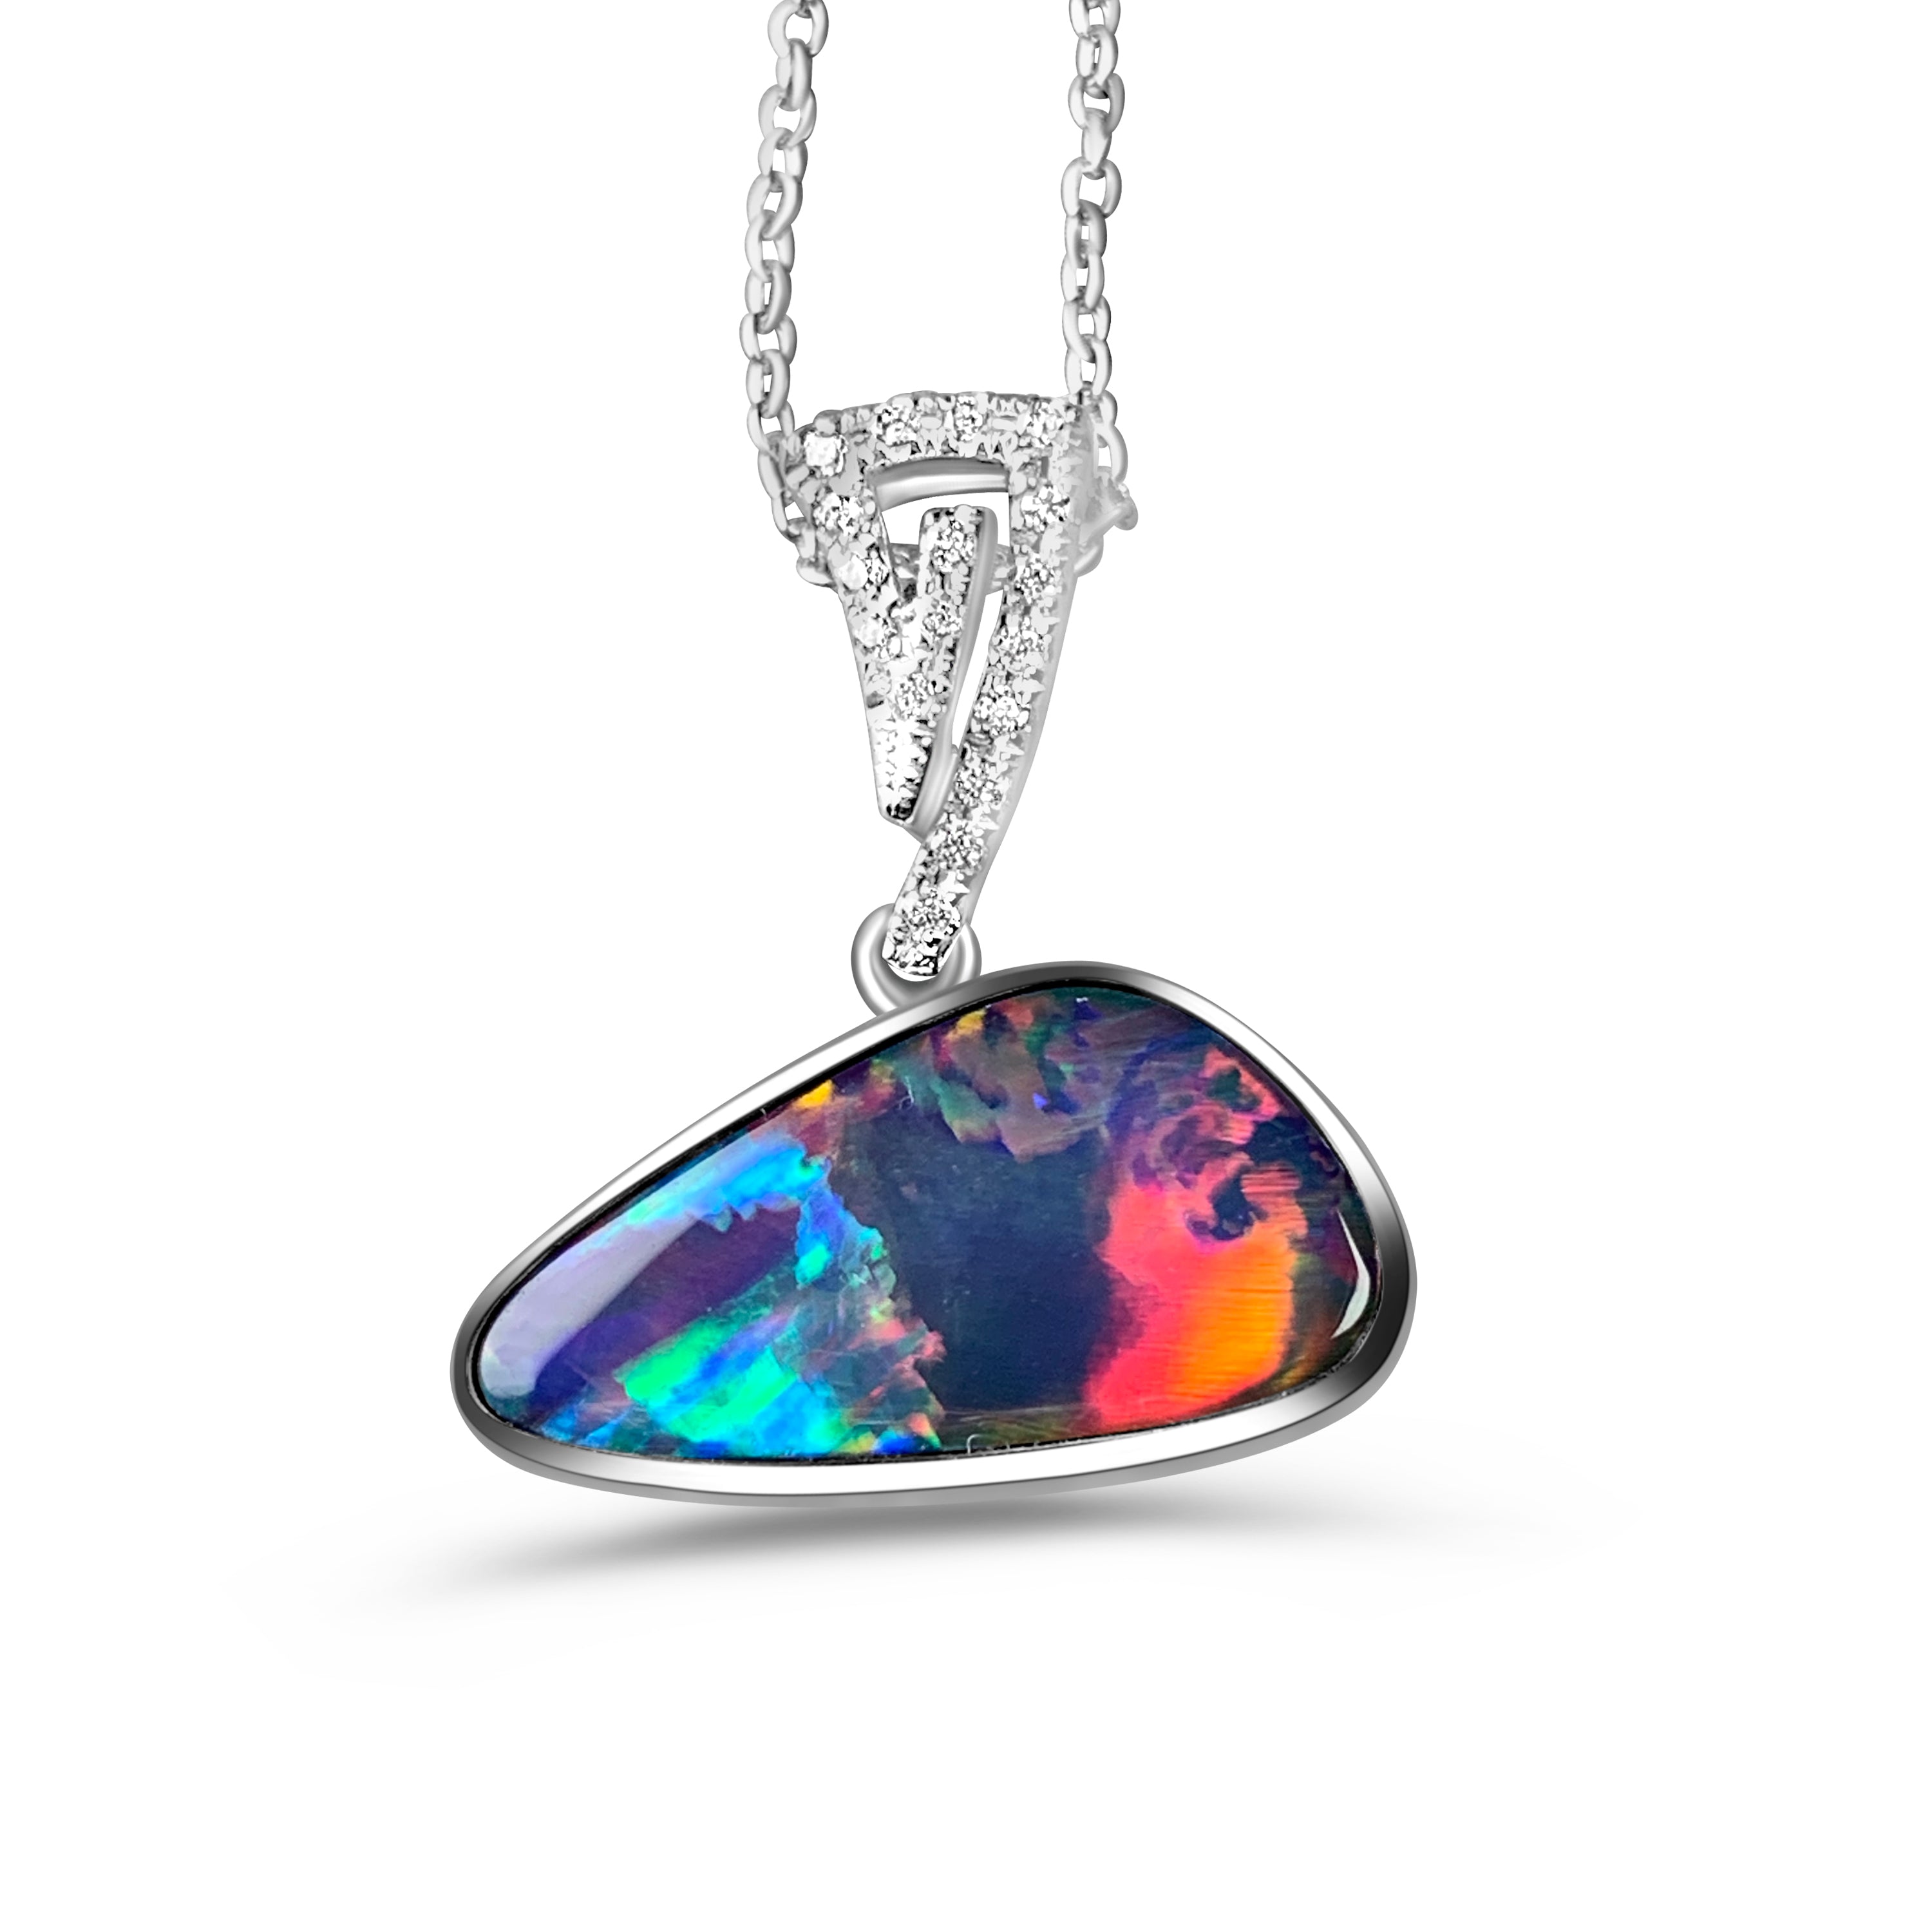 14kt White Gold Opal 3.6ct and Diamond pendant - Masterpiece Jewellery Opal & Gems Sydney Australia | Online Shop